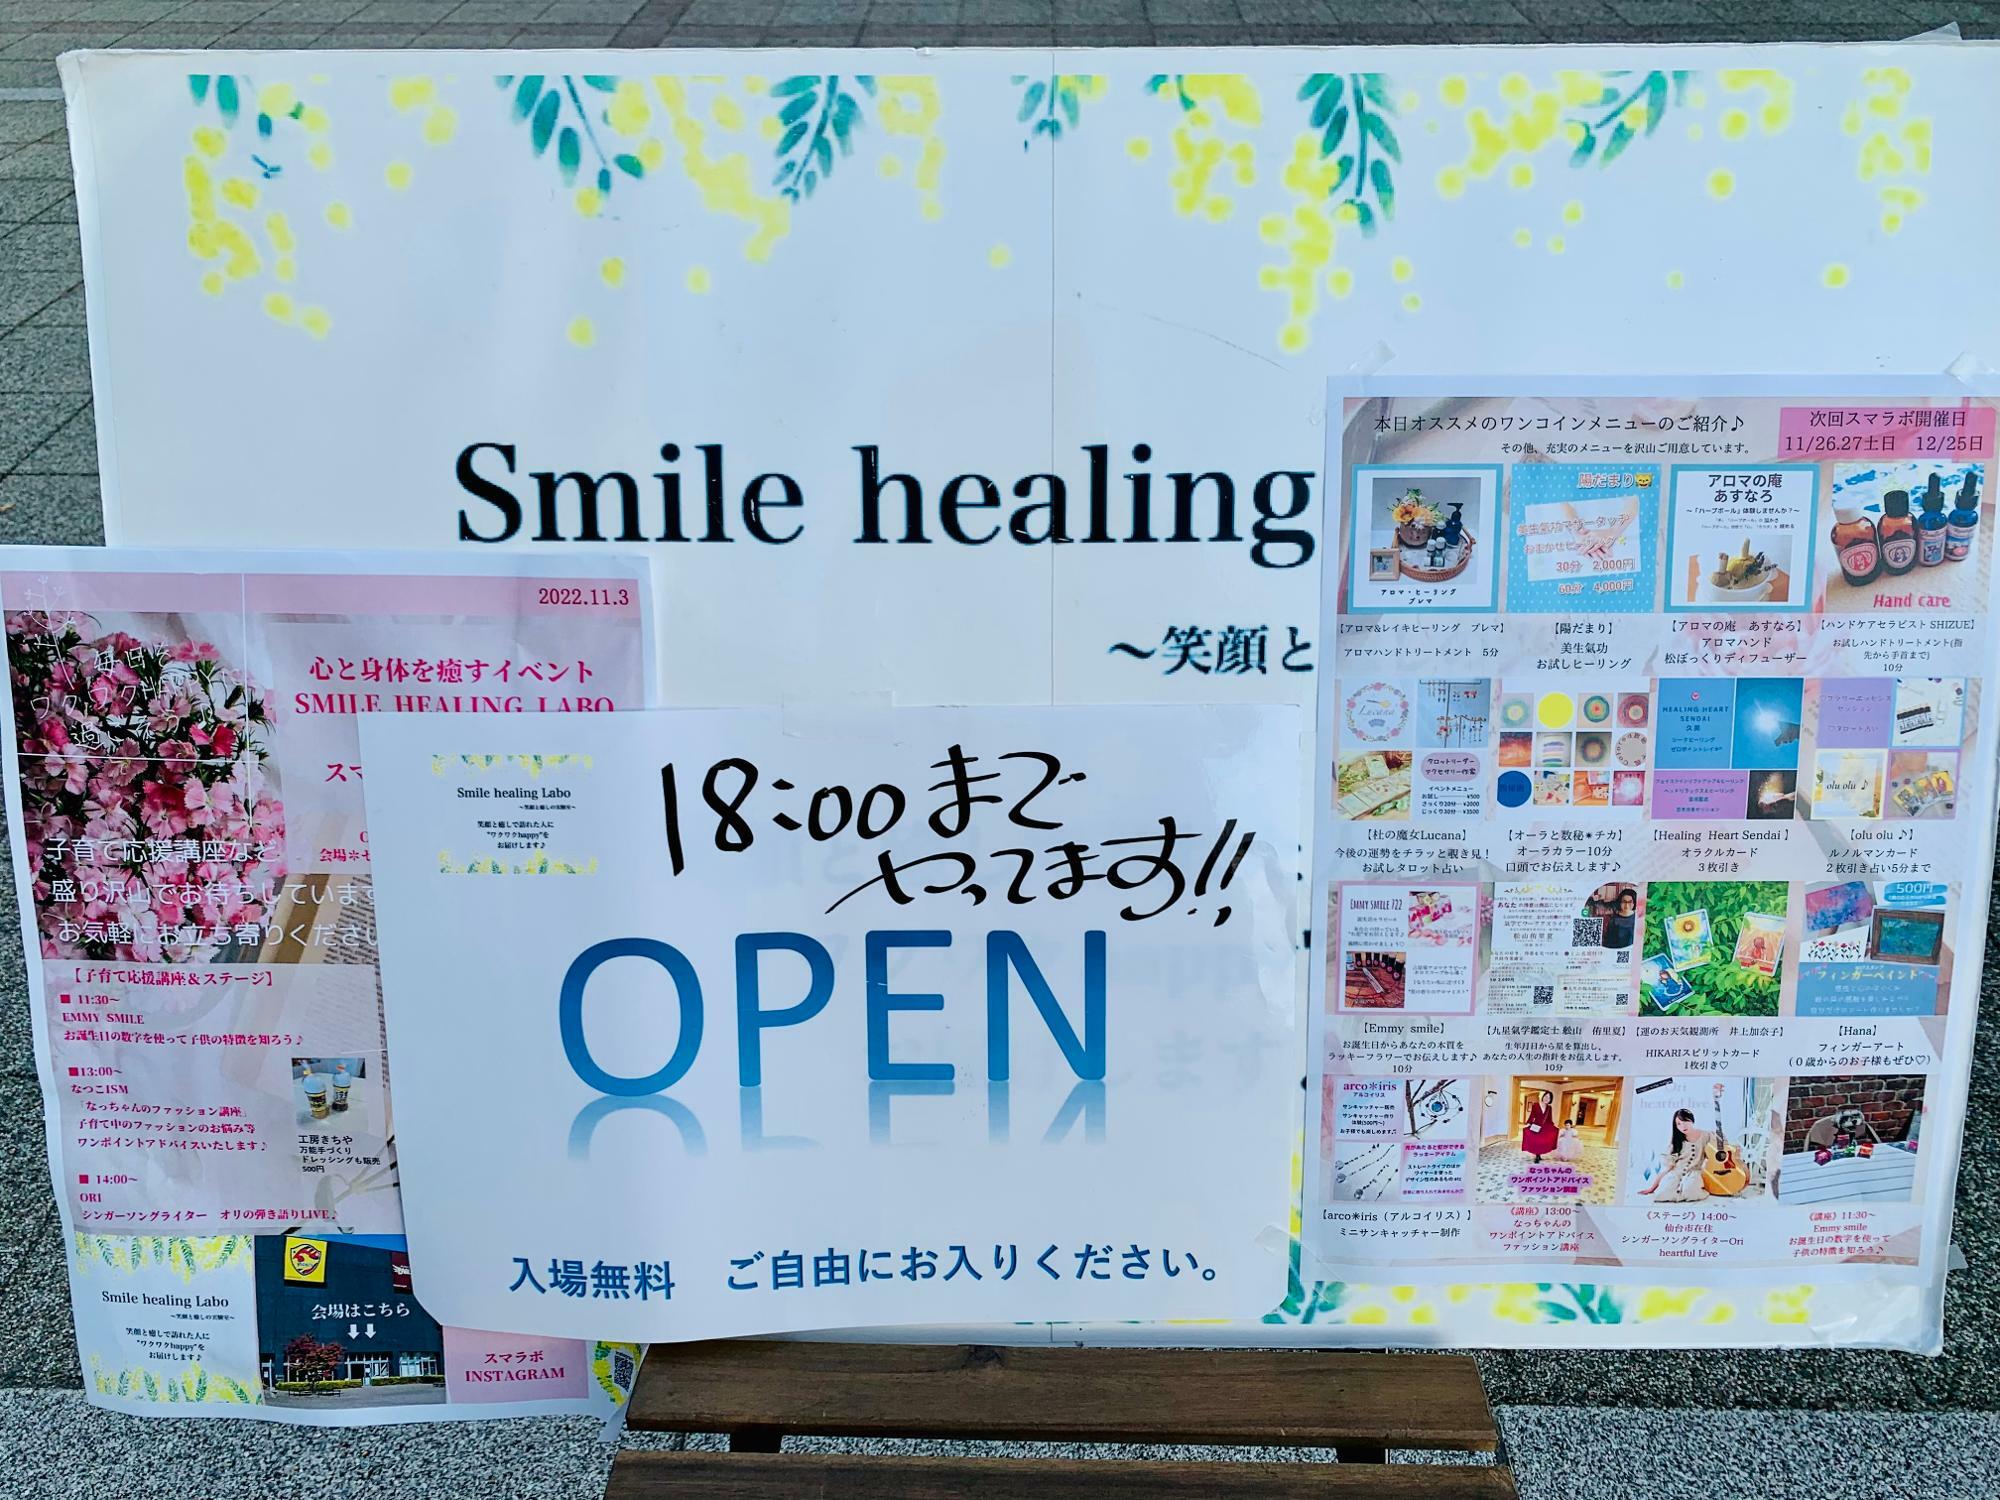 Smile healing Labo2022